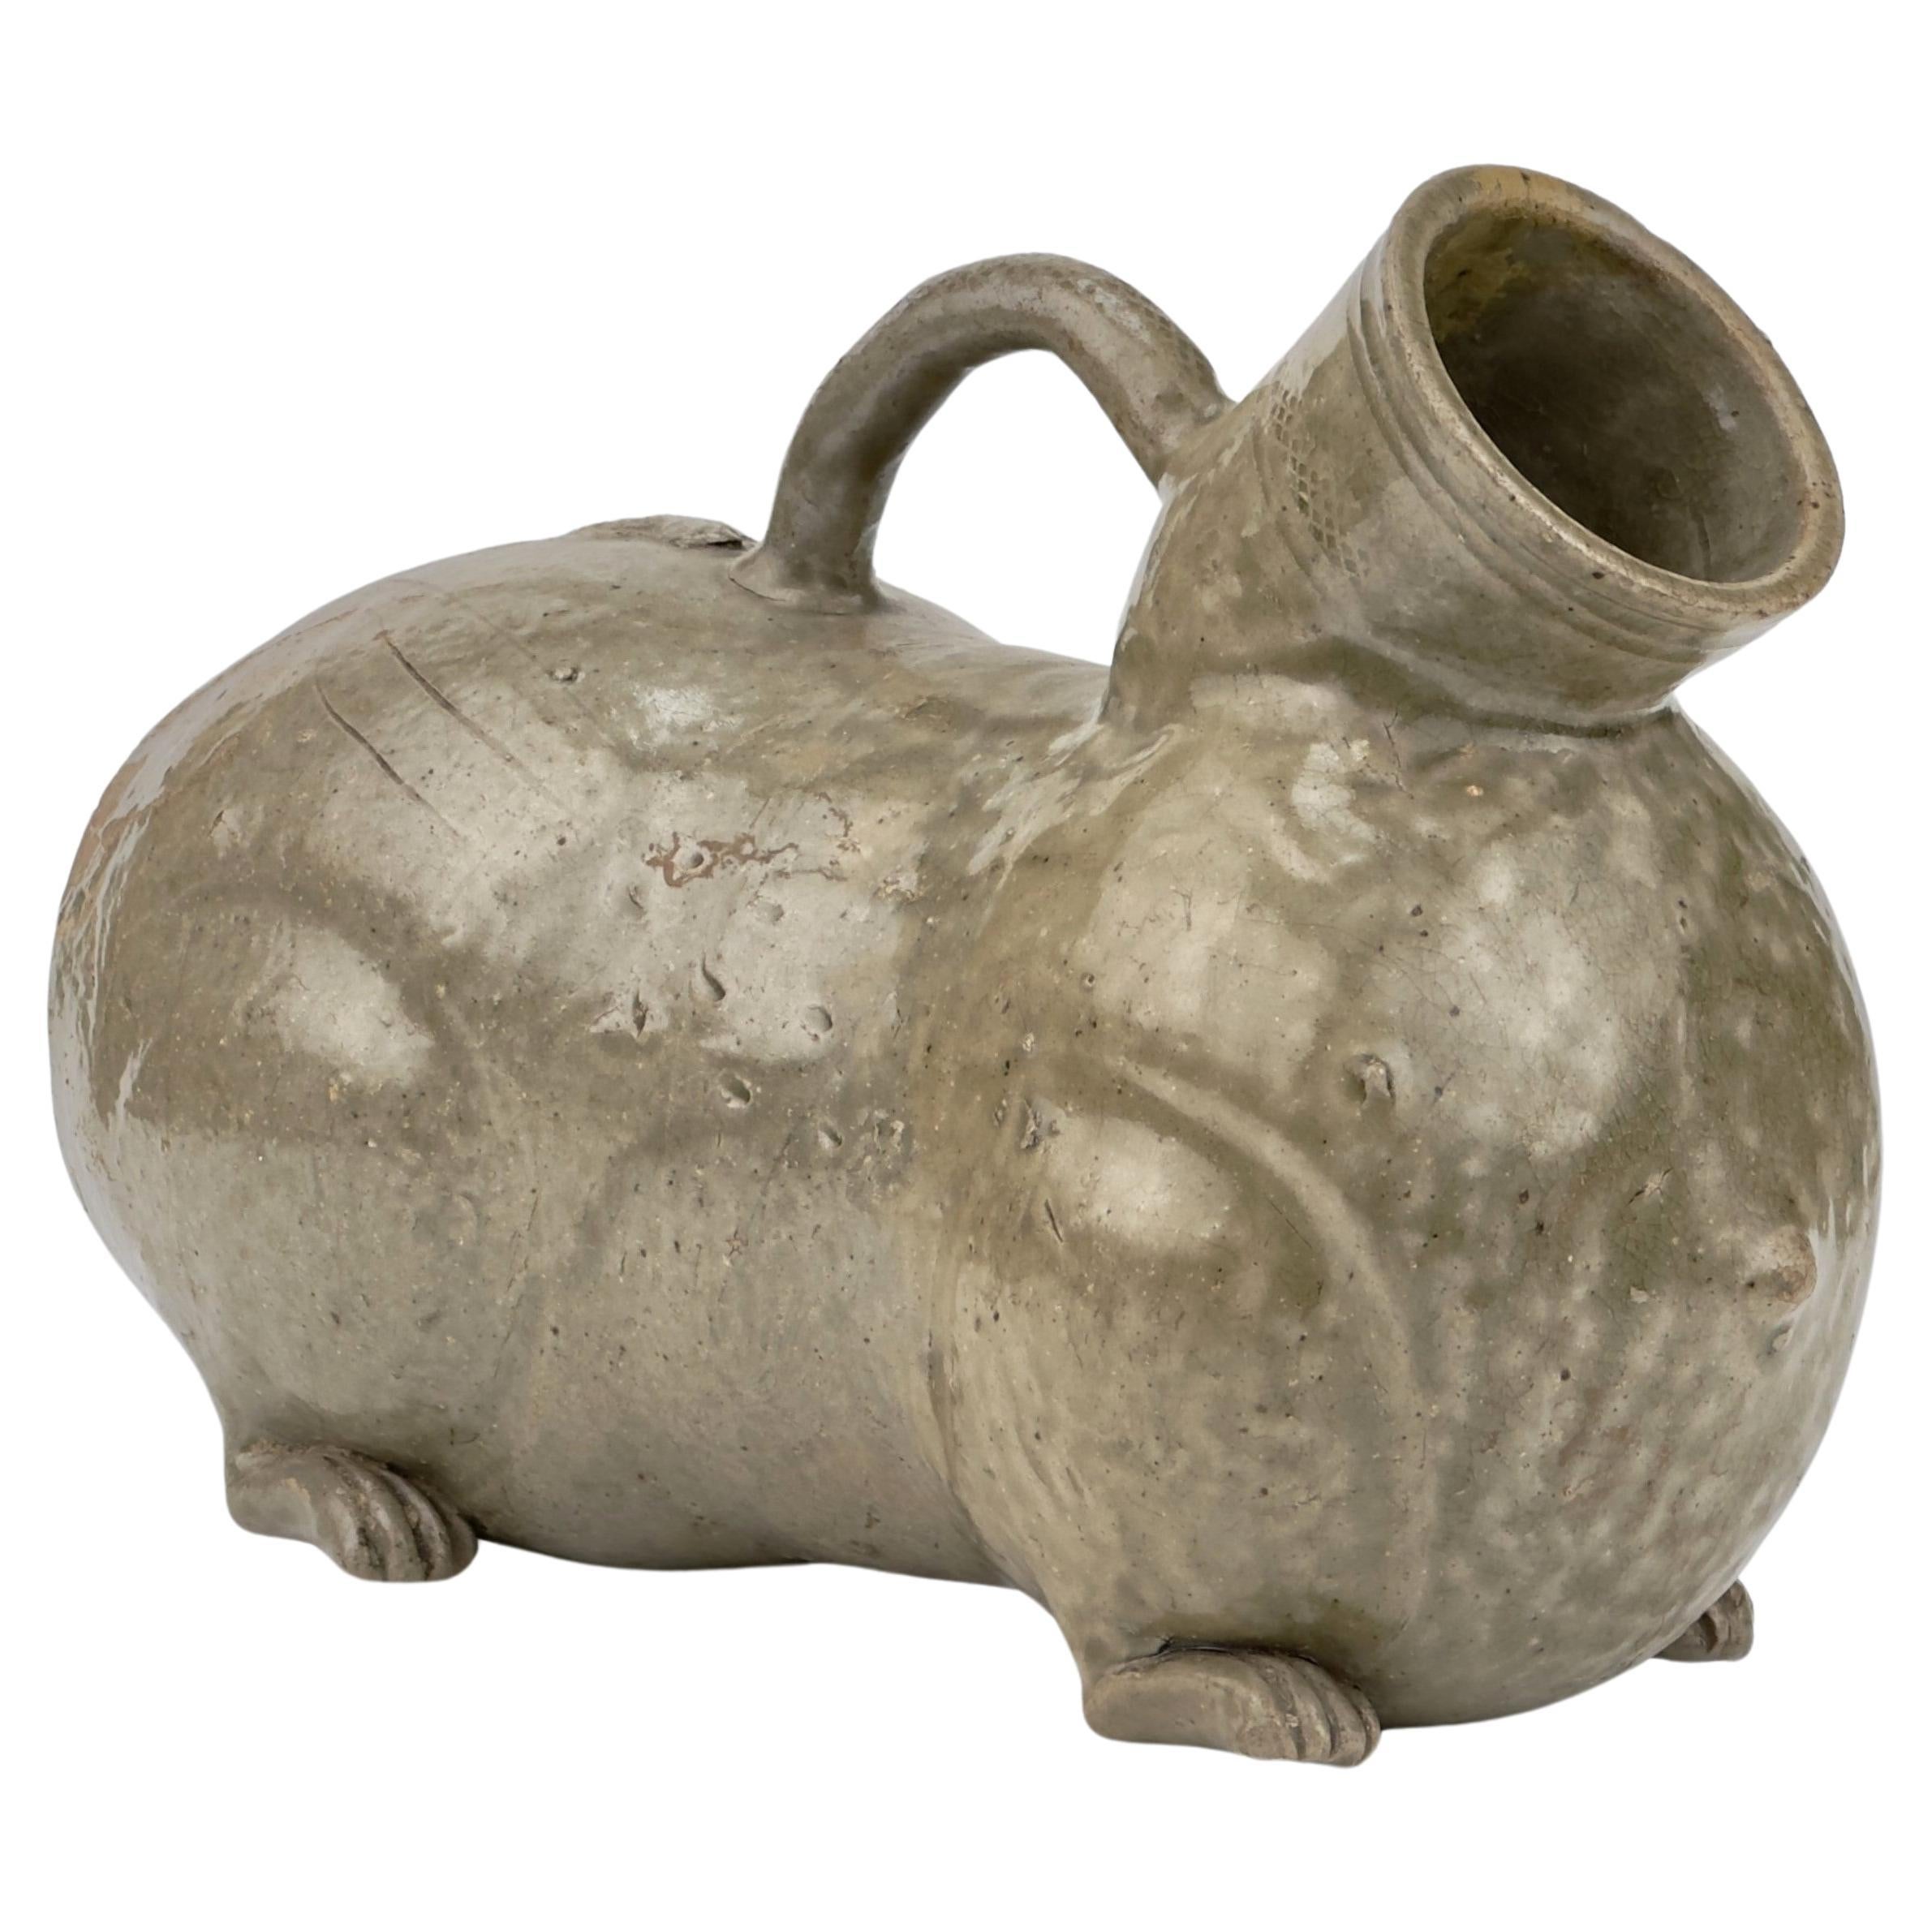 Rare Yue Celadon-Glazed Figural Vessel, Western Jin dynasty (265-420) For Sale